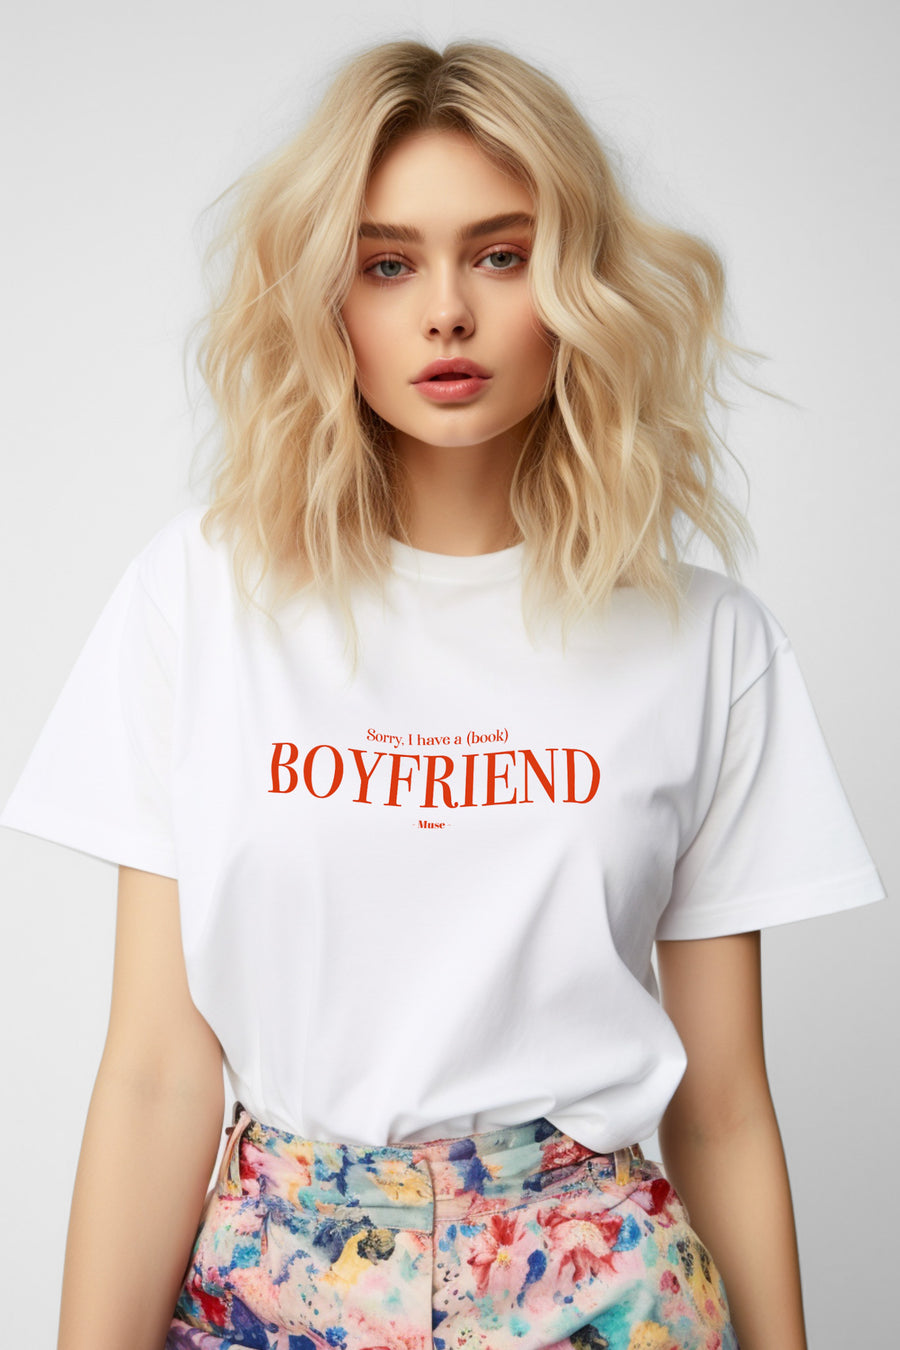 T-shirt | Sorry, I have a (book) boyfriend (5 coloris)